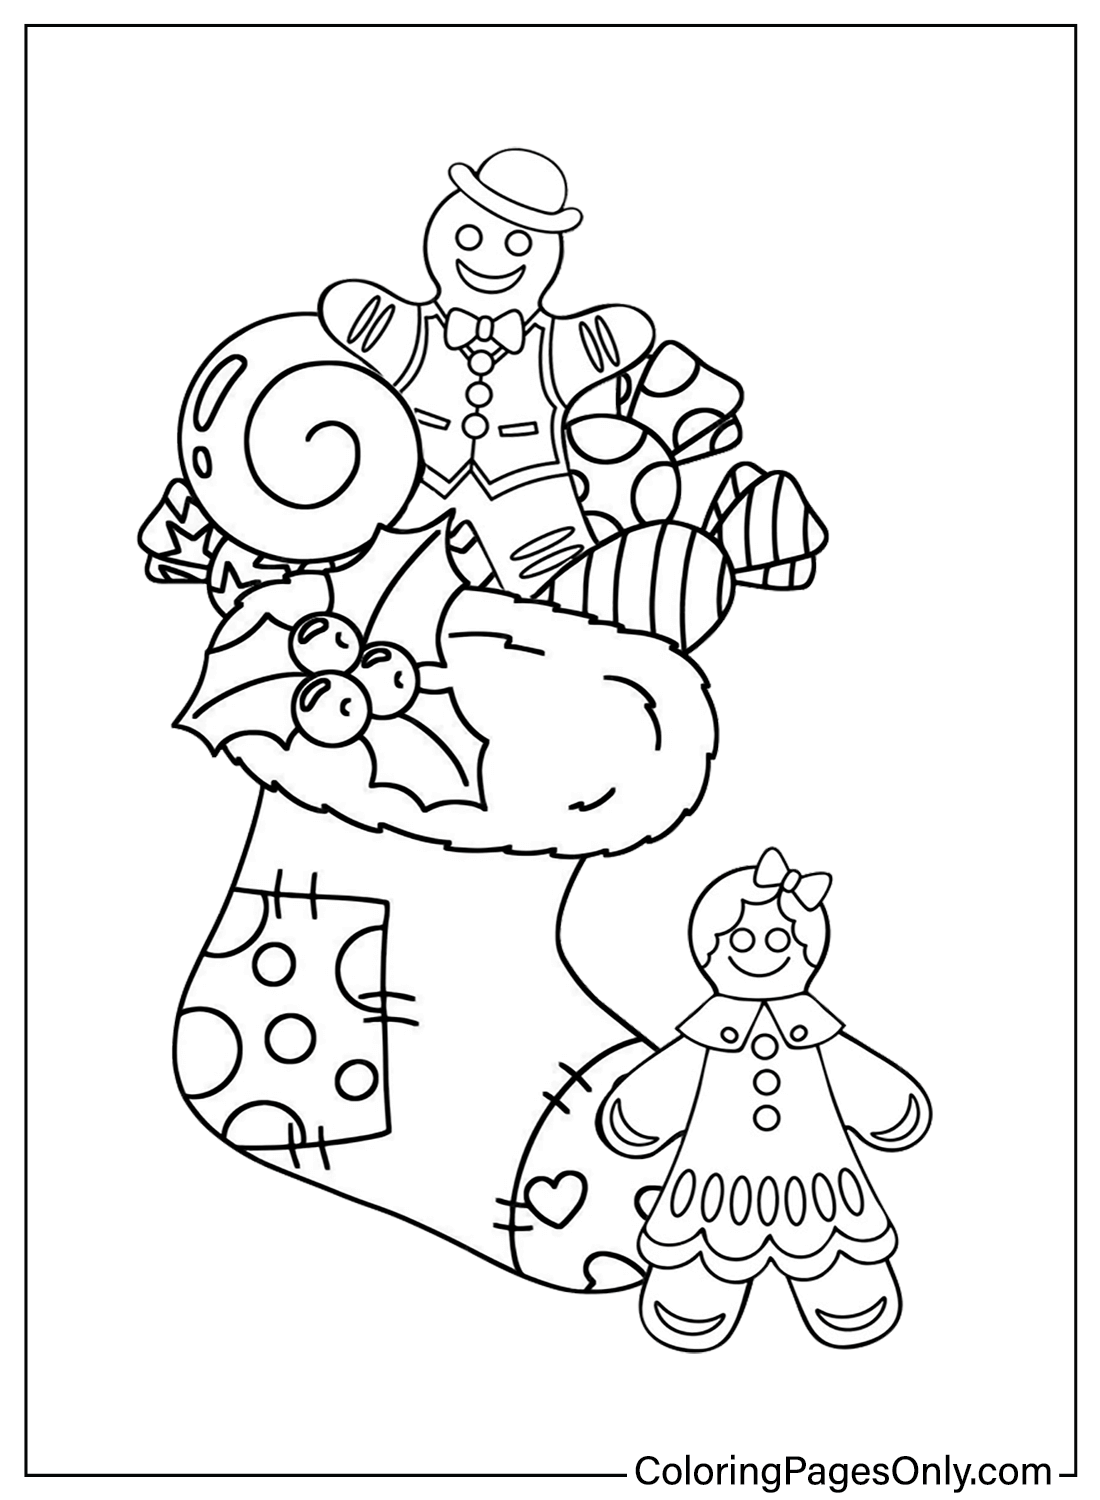 Coloring Page Gingerbread Man Printable